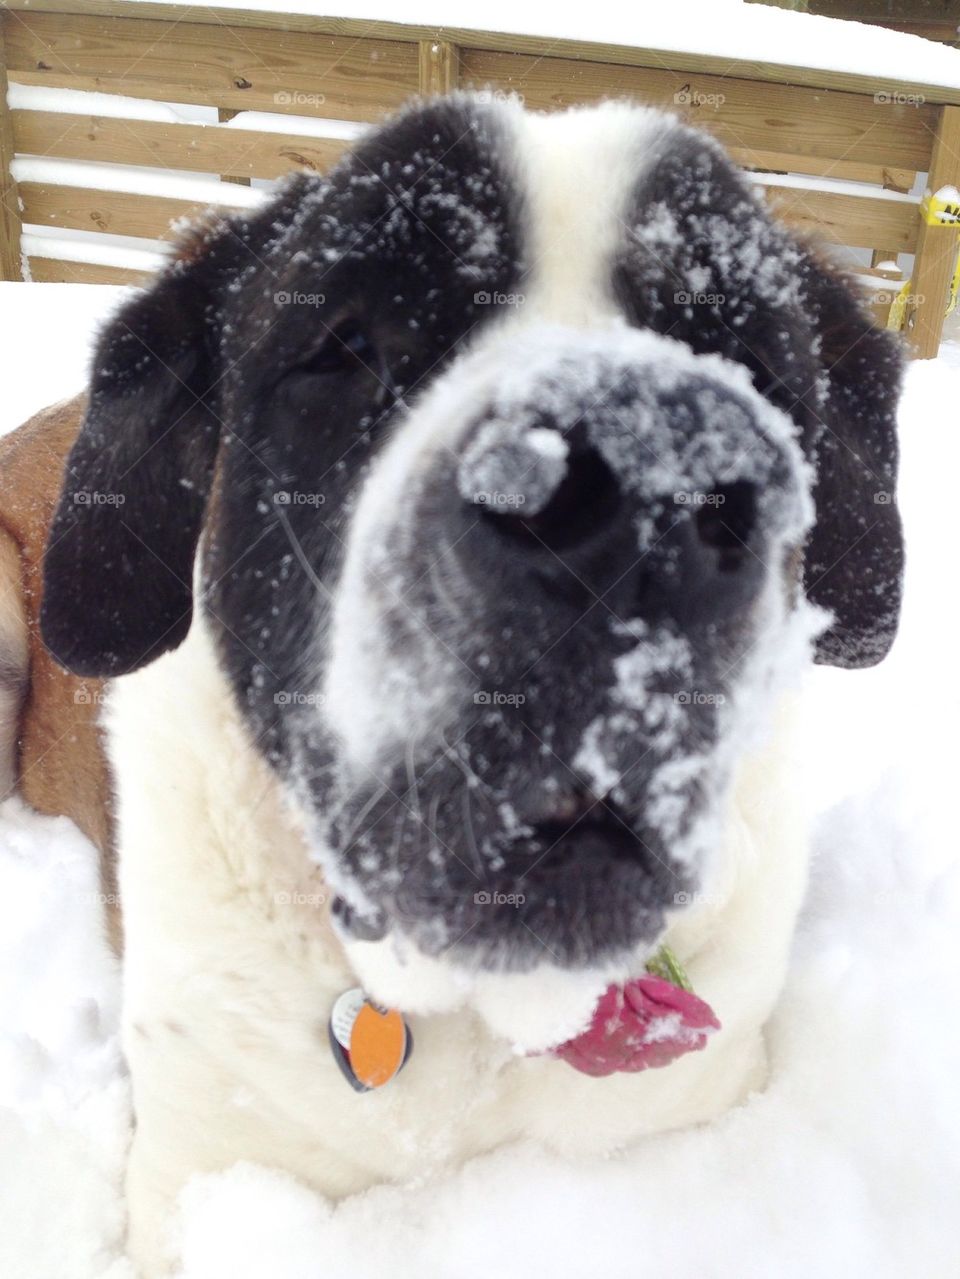 Snow dog day